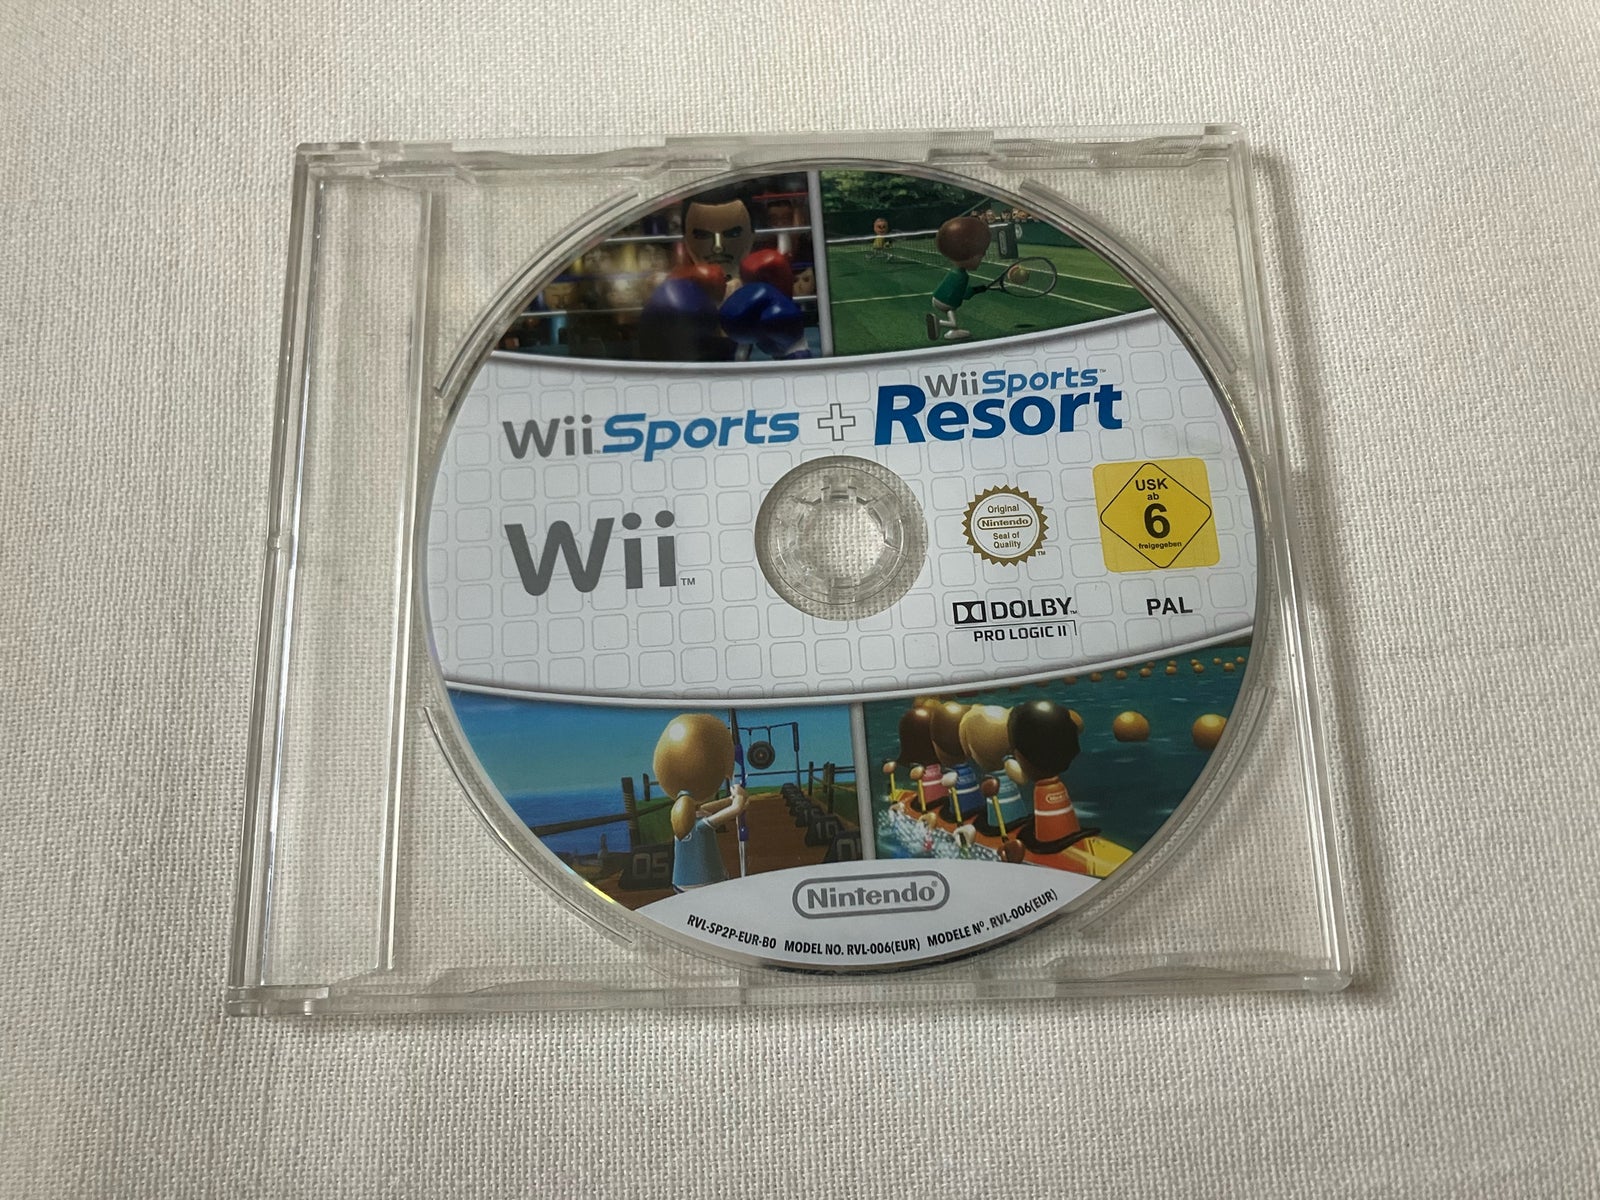 WiiSports + Resort, Nintendo Wii